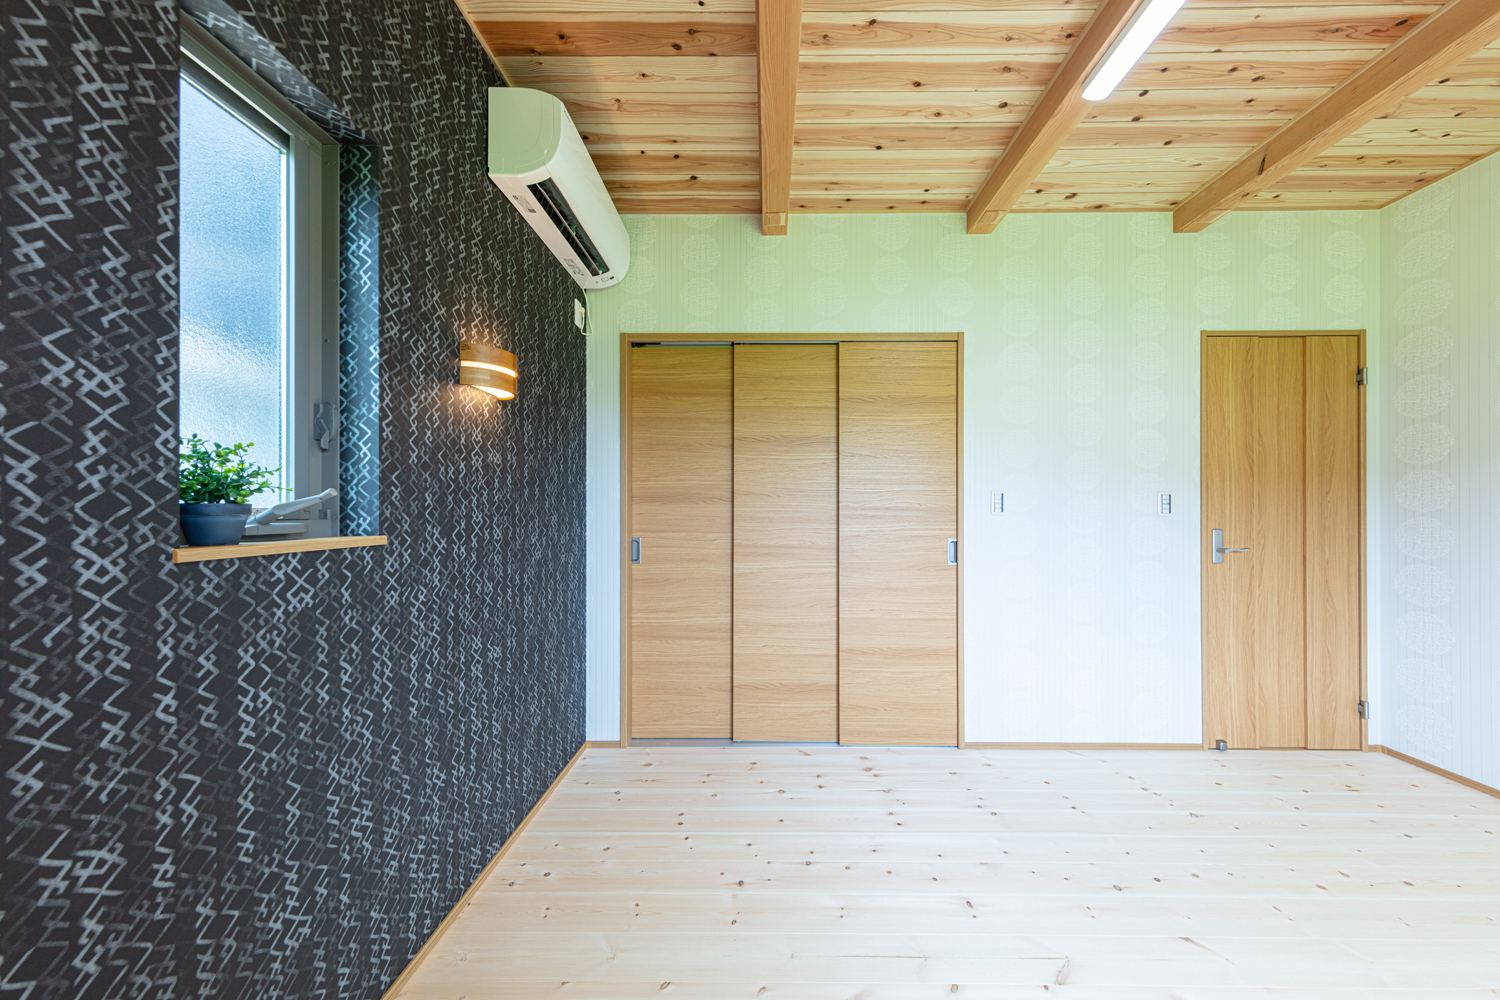 和歌山市 新築 一戸建て 木の家 寝室